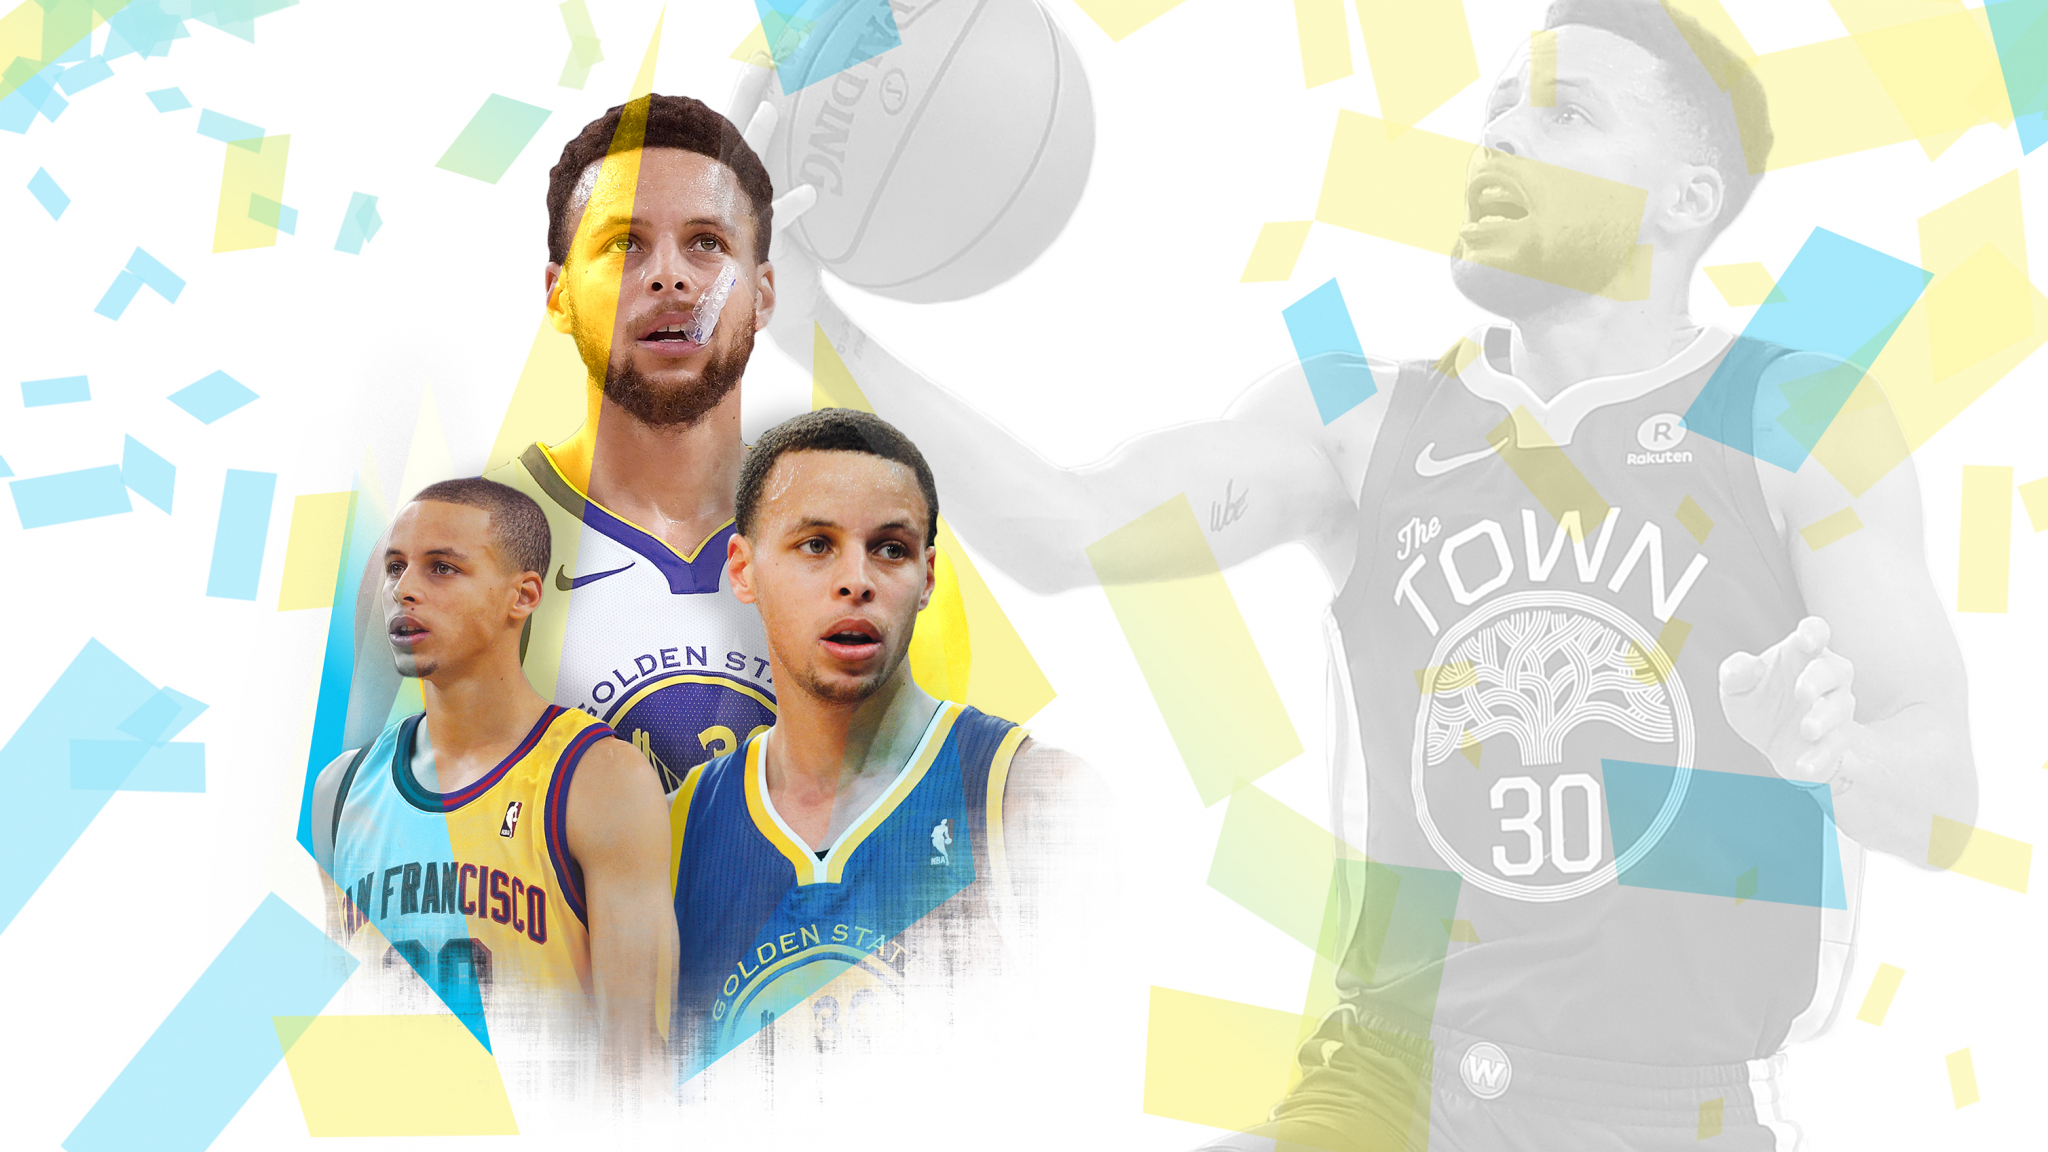 Stephen Curry's revolutionary impact felt in Warriors' NBA title